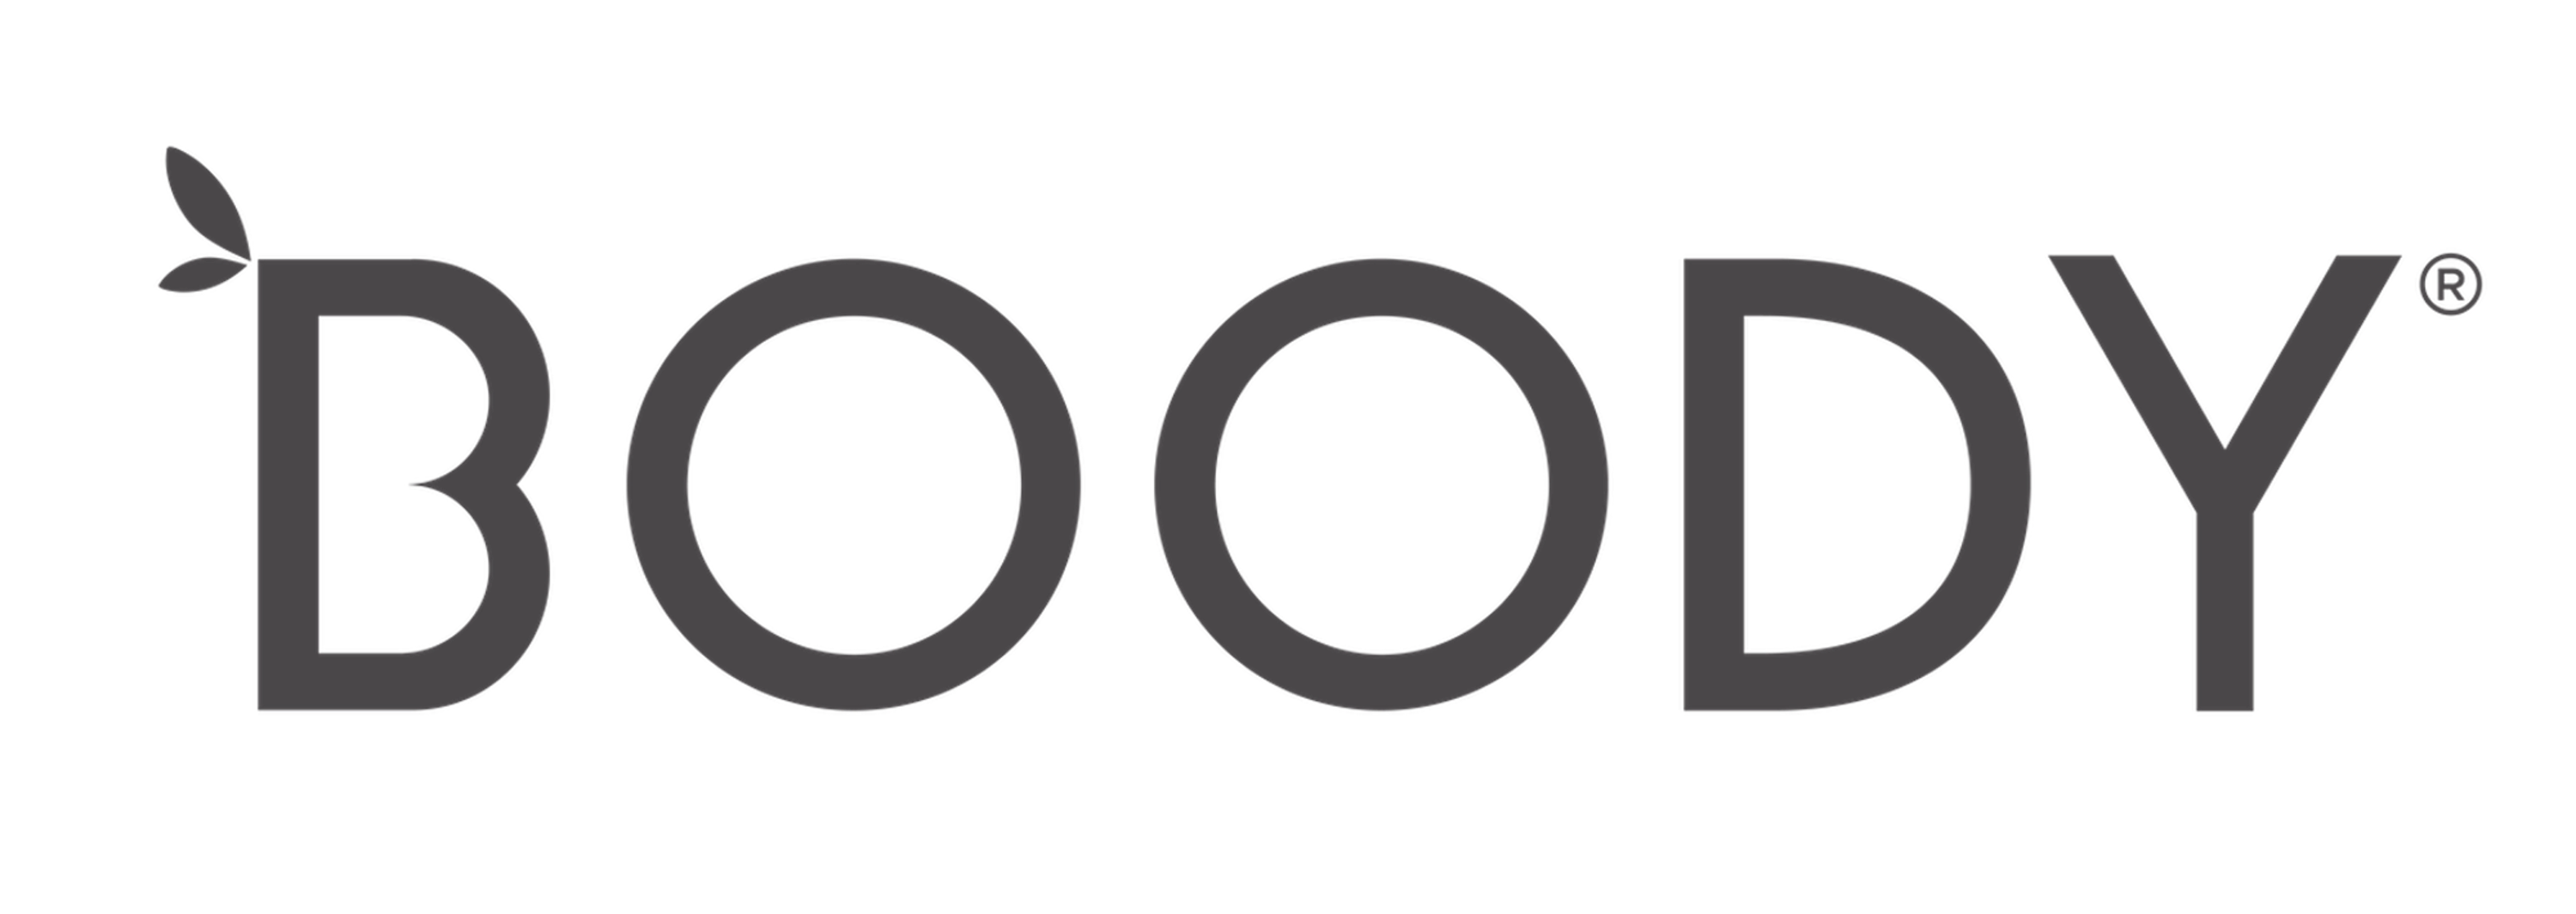 Boody UK logo